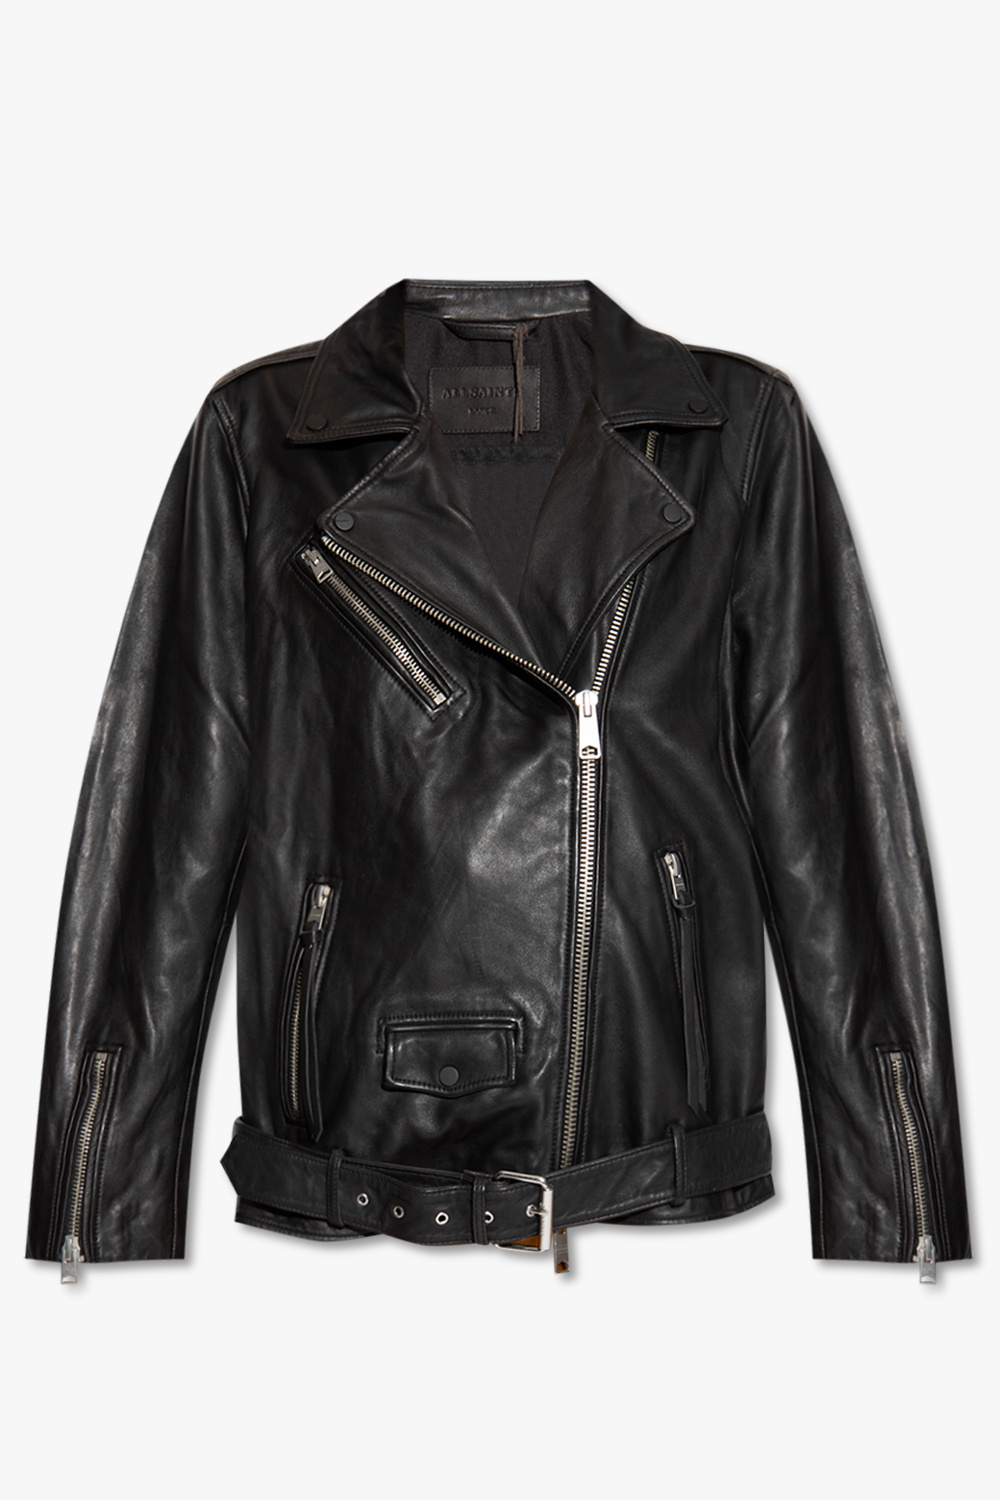 AllSaints ‘Billie’ oversize jacket